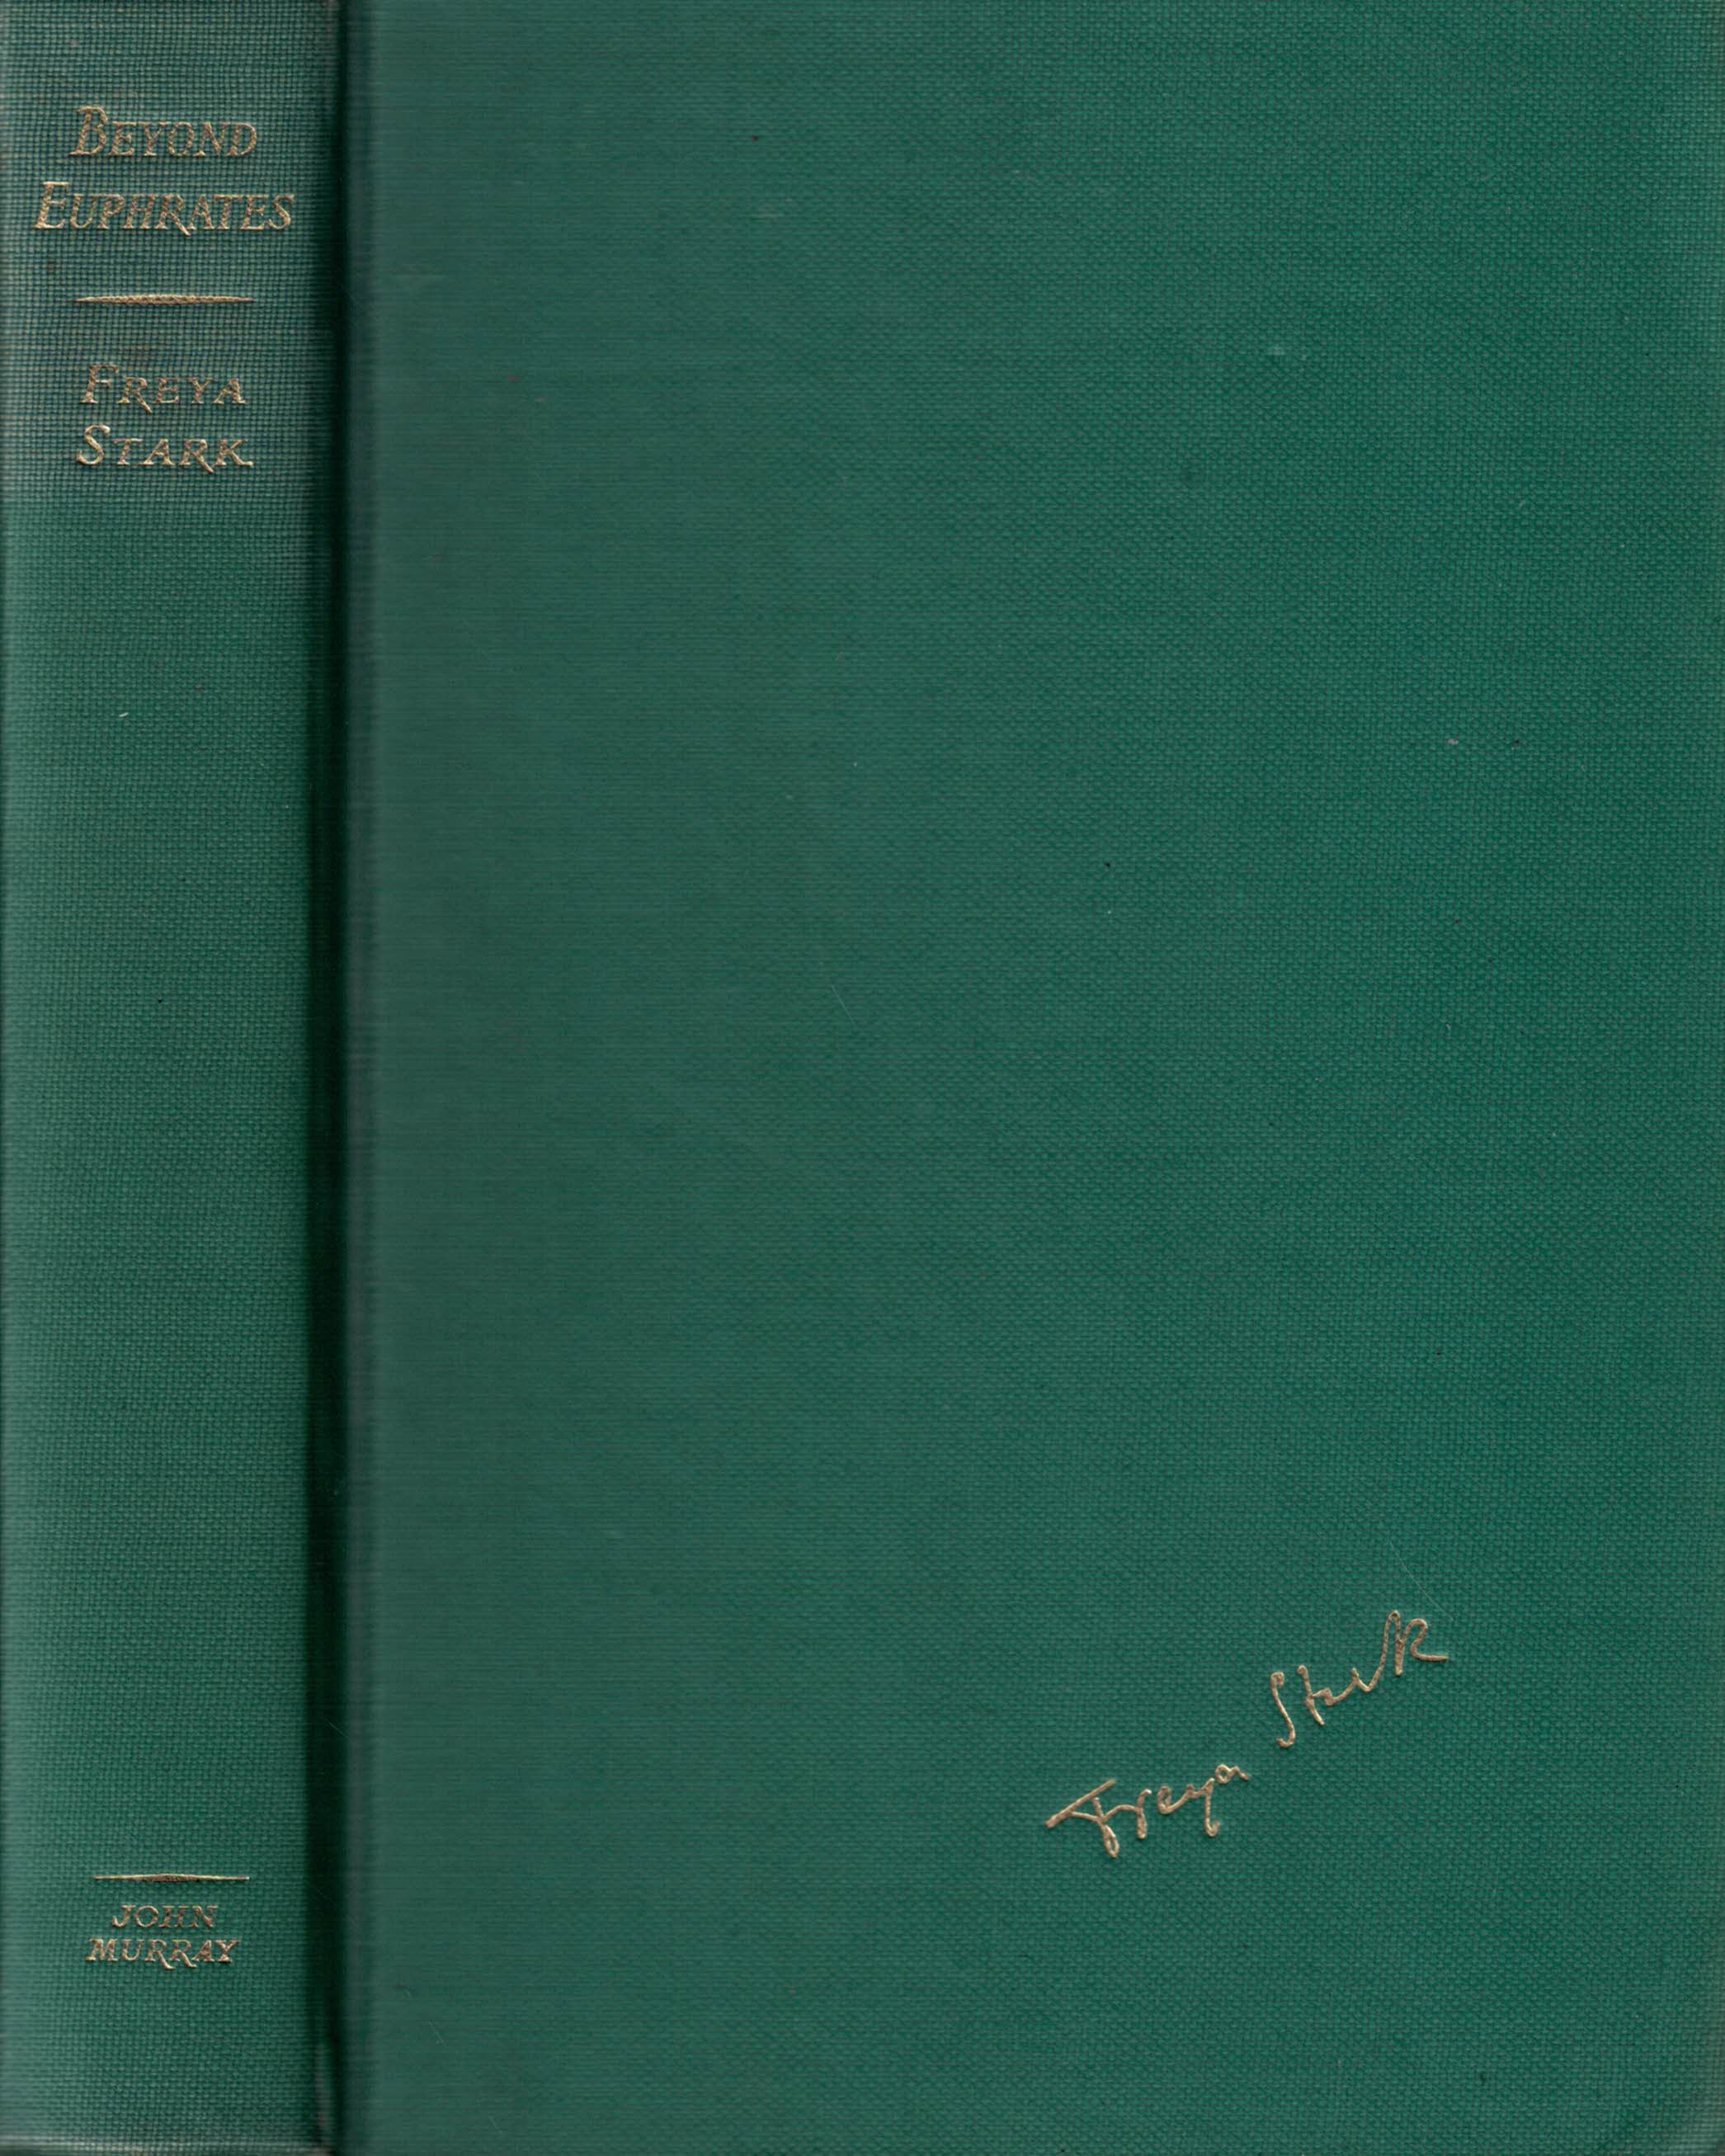 Beyond Euphrates: Autobiography 1928 - 1933.